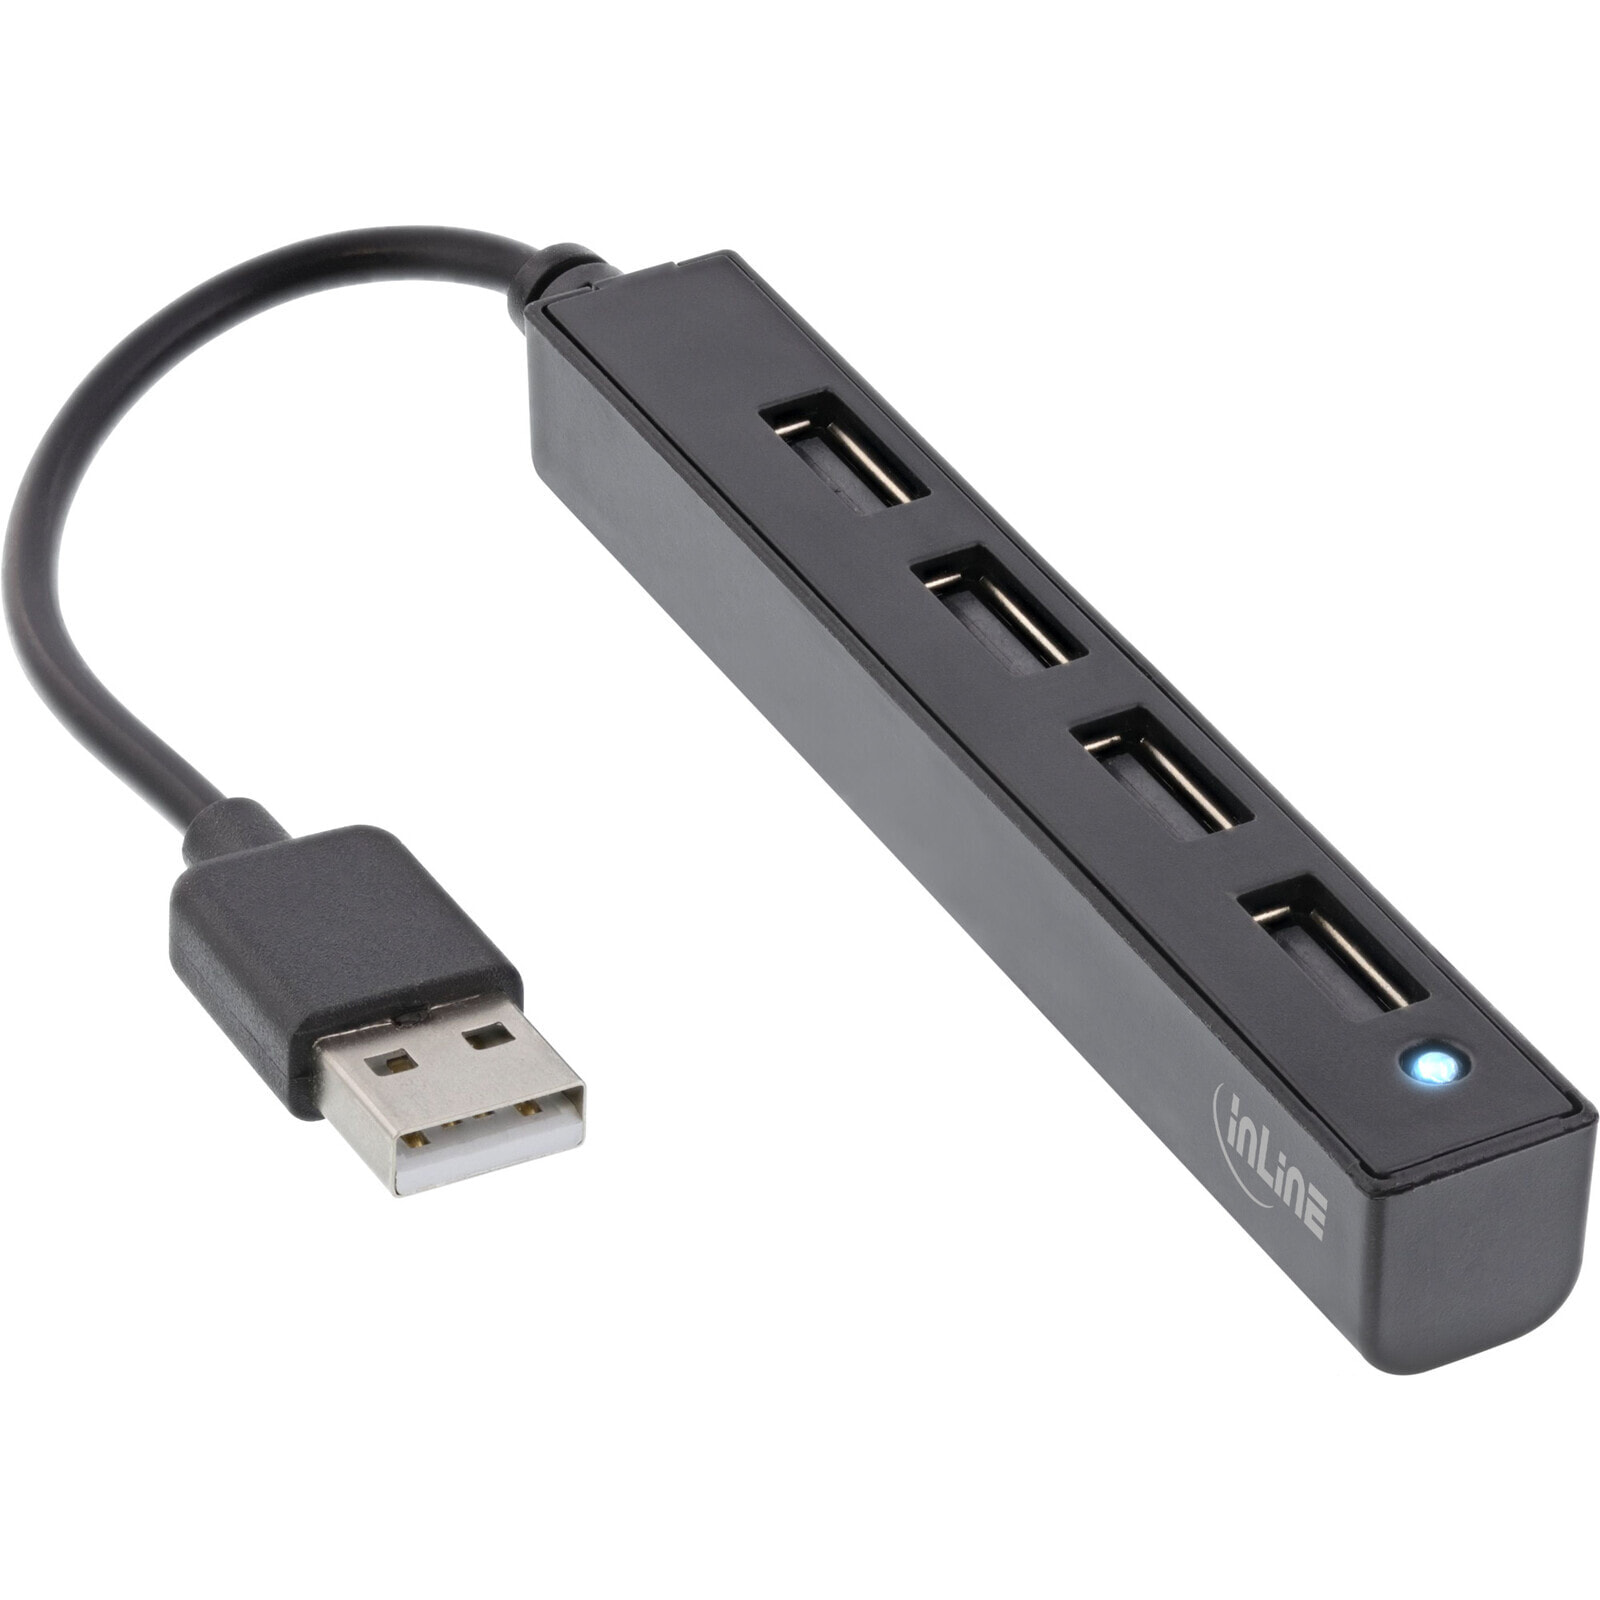 USB 2.0 4-Port Hub - USB-A male to 4x USB-A female - cable 15cm